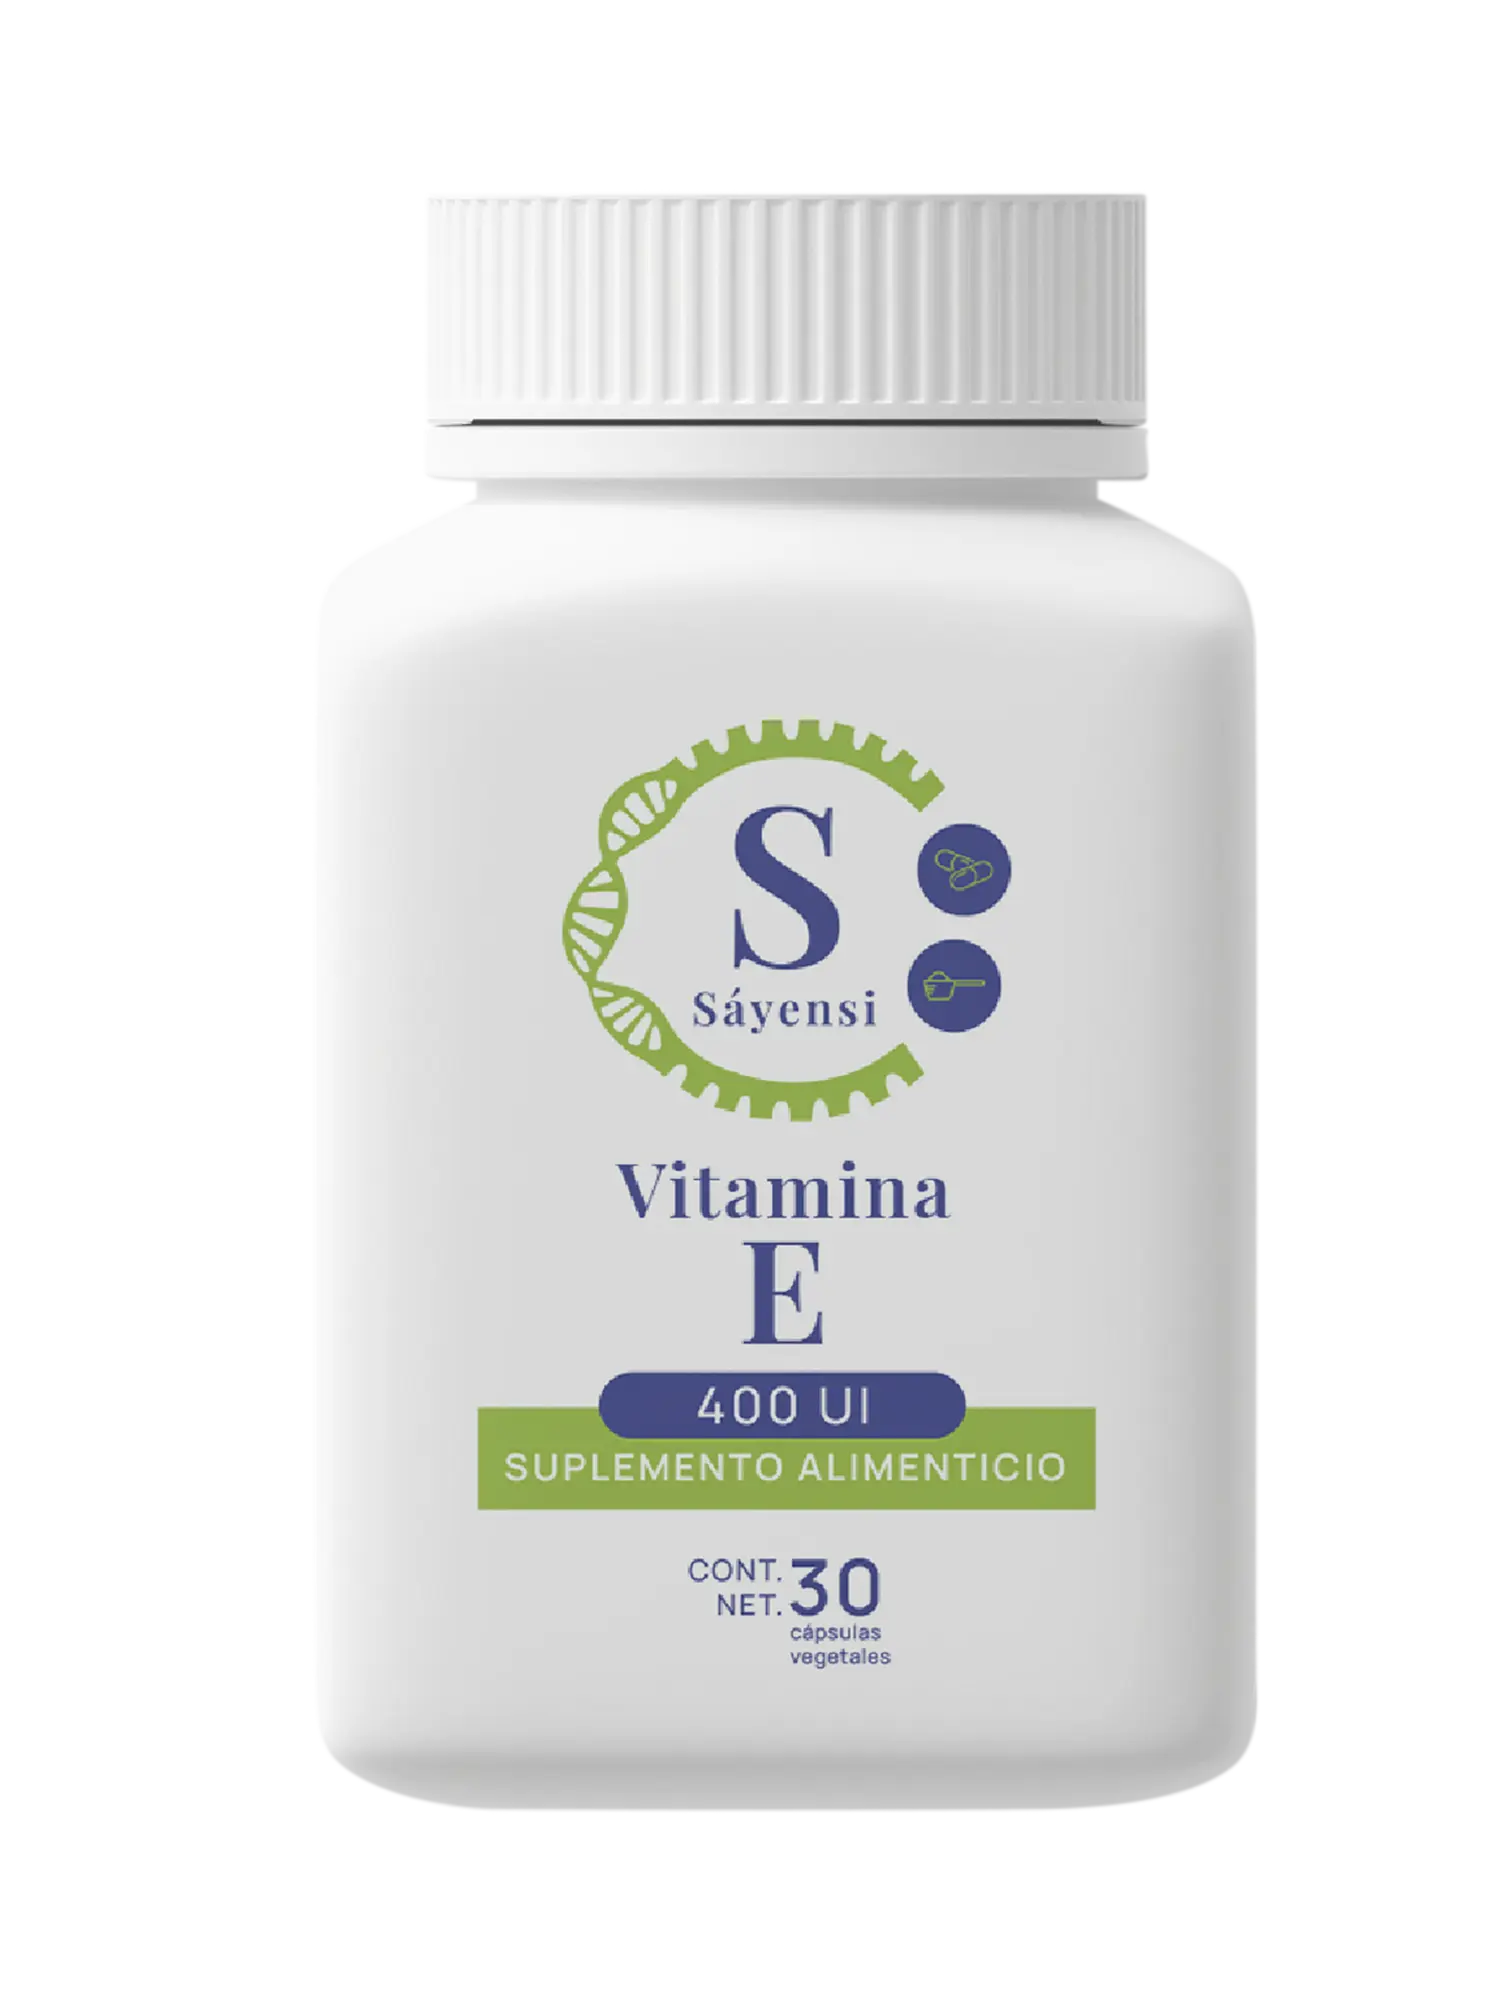 Vitamina E Sáyensi - 400 UI - PURESUPPLY